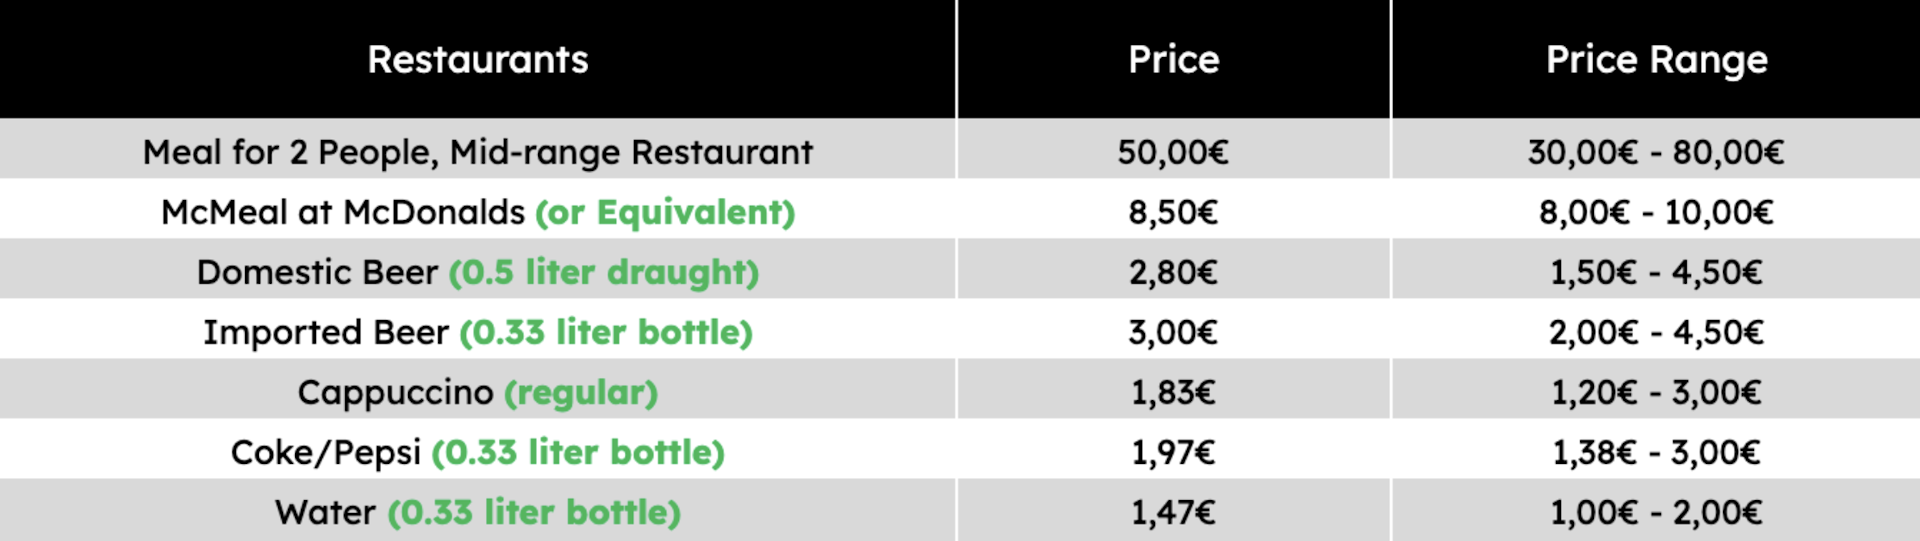 Cost of living spain - Price of restaurant spain